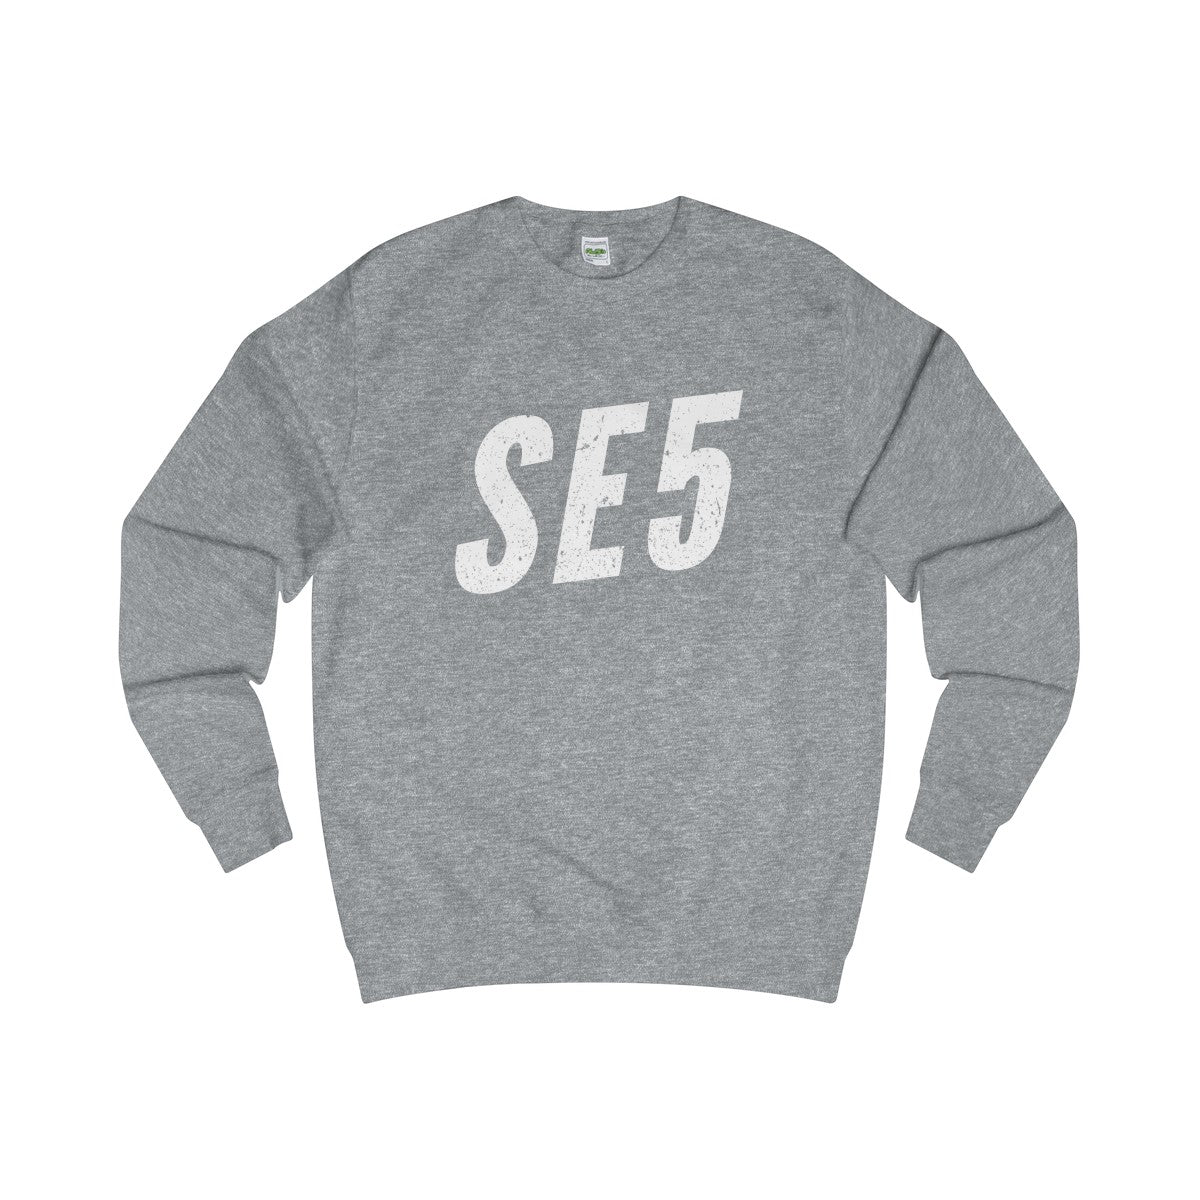 Camberwell SE5 Sweater